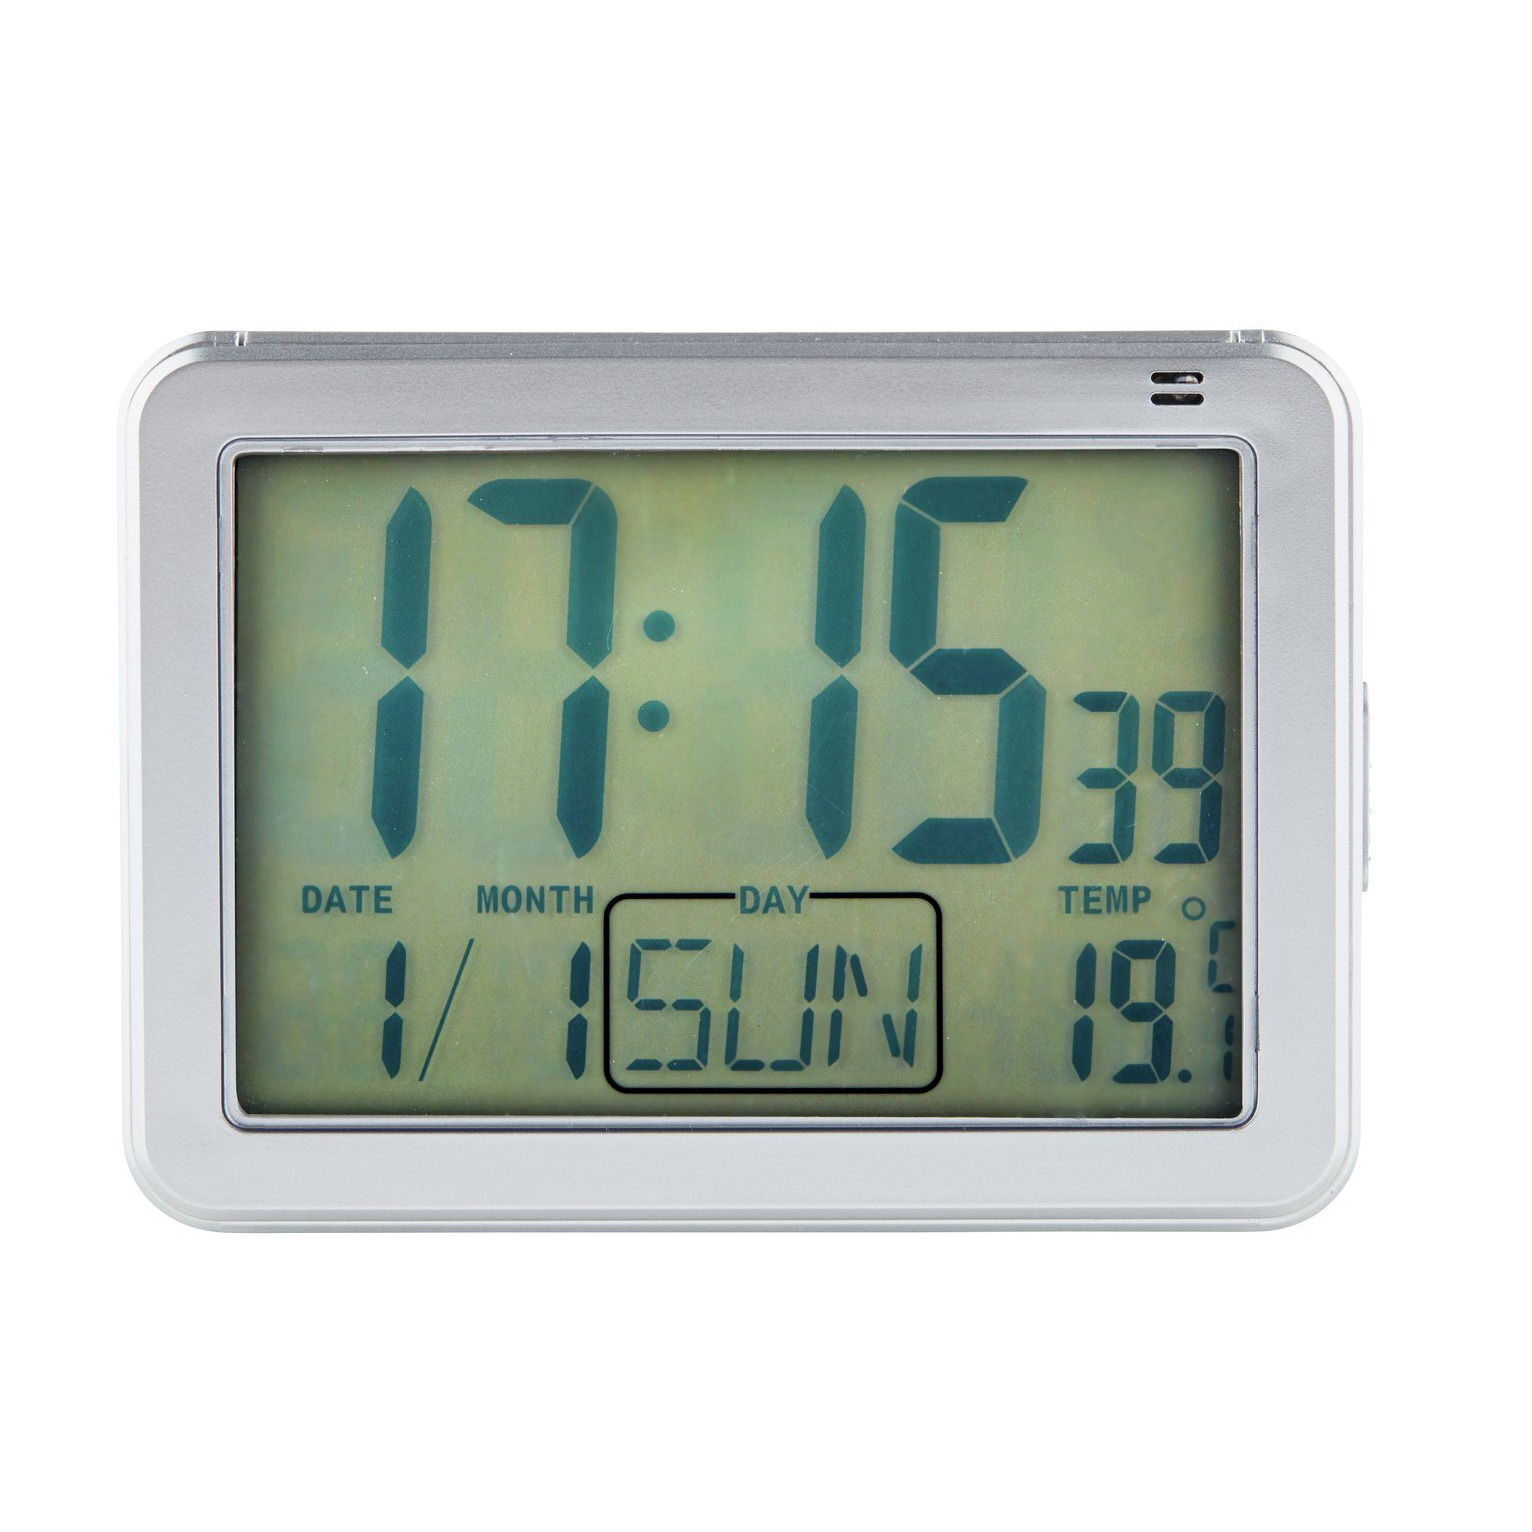 Constant Large Display Digital Alarm Clock - Silver - image 1